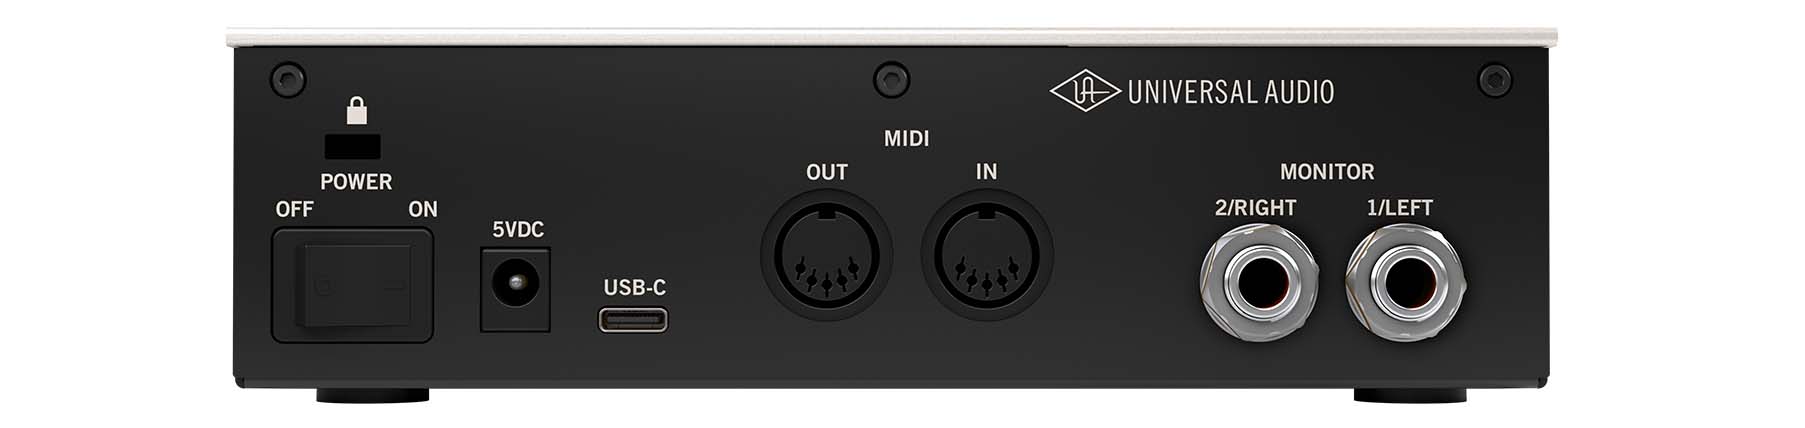 Universal Audio VOLT 2, panel de conexiones